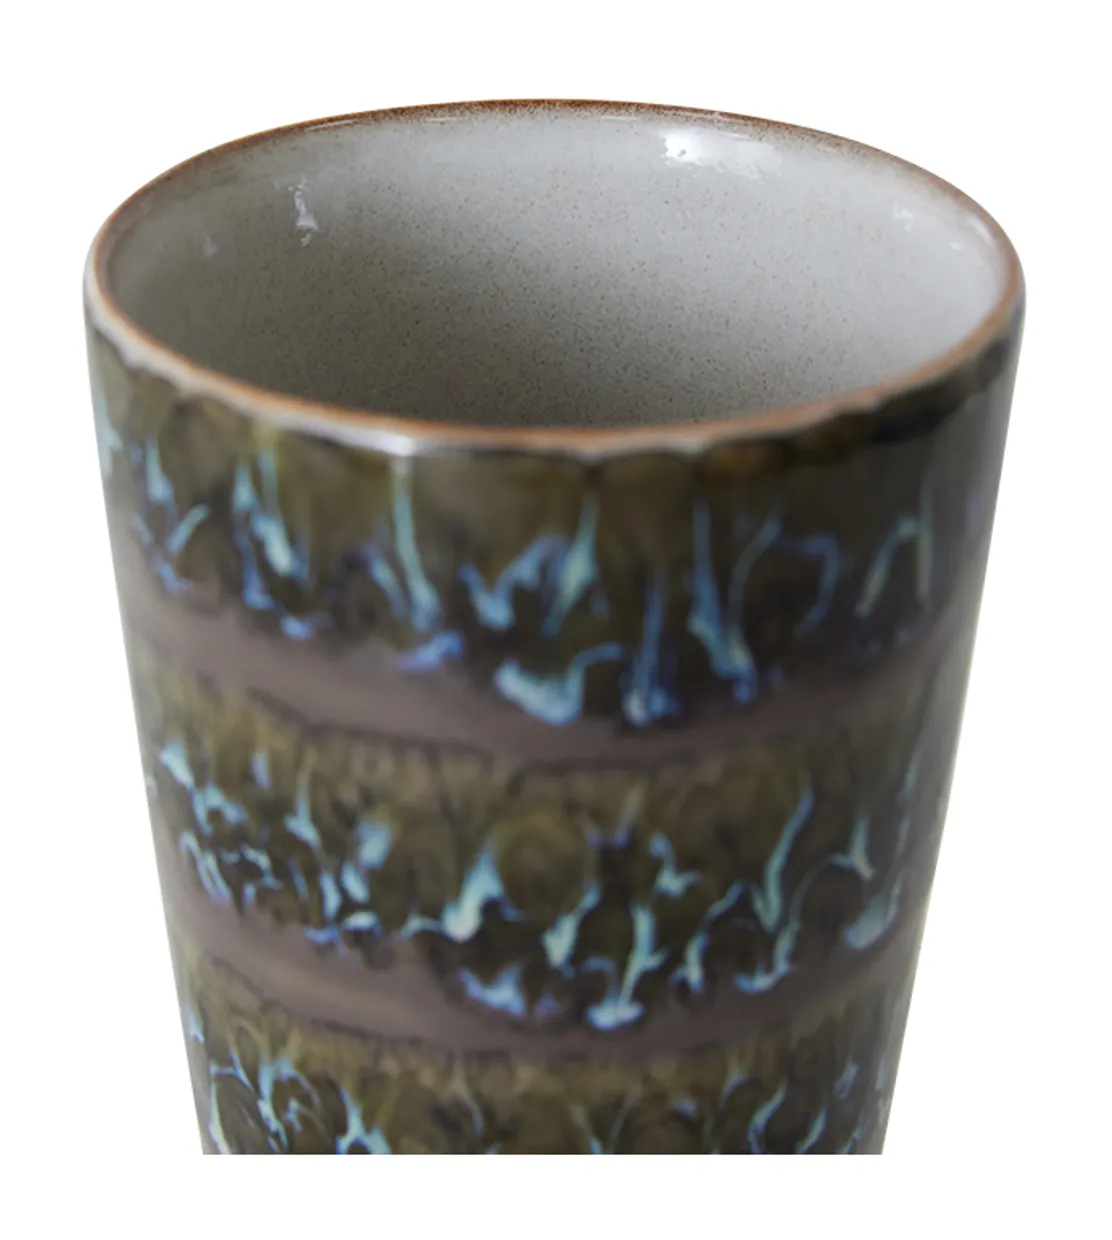 70s ceramics: latte mug, fern